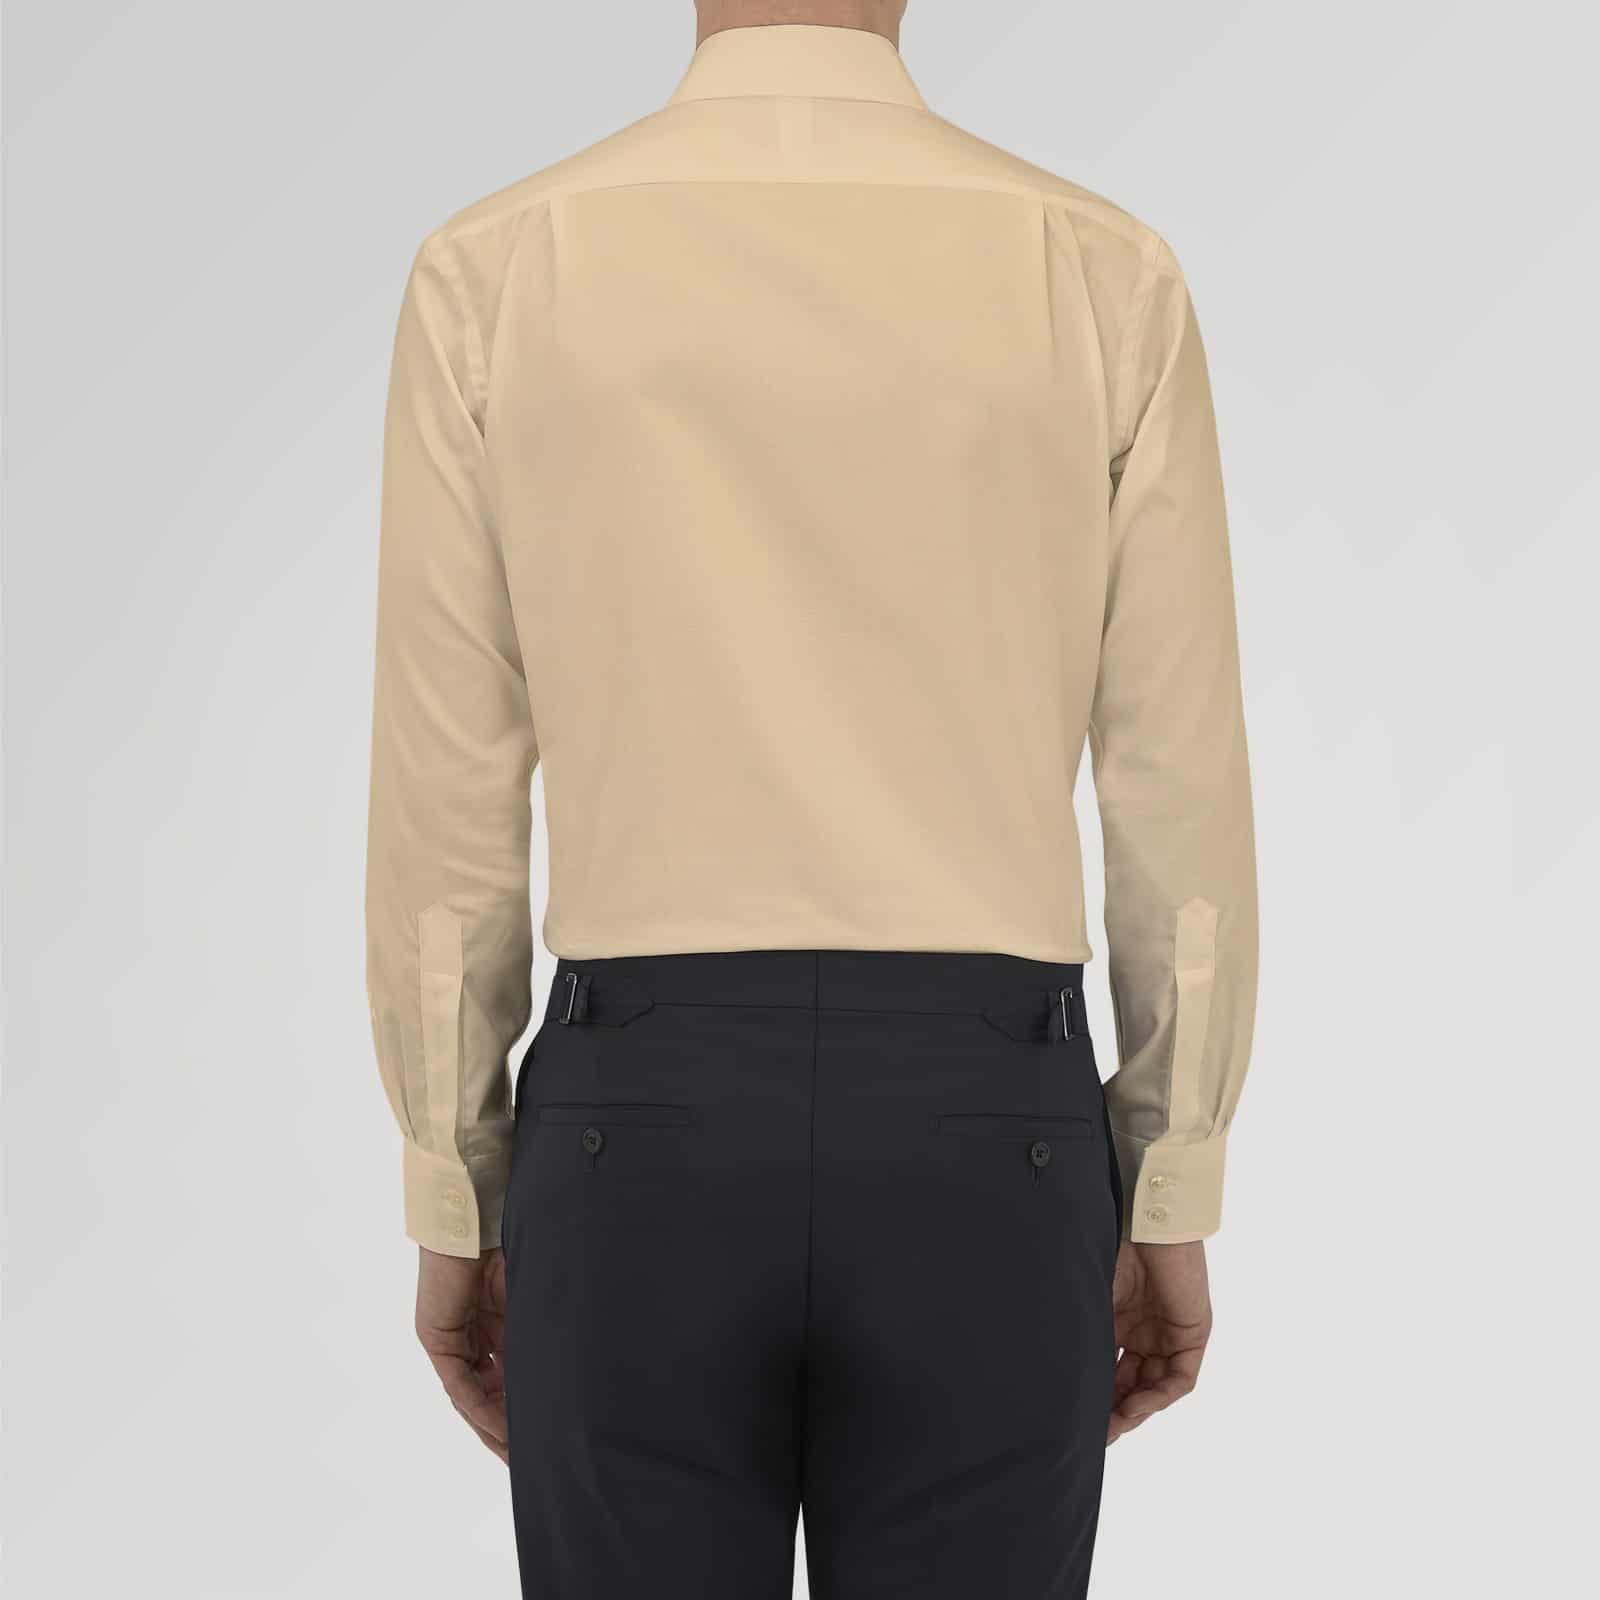 Men Dark Beige Cotton Poly Formal Shirt-RRBMS013